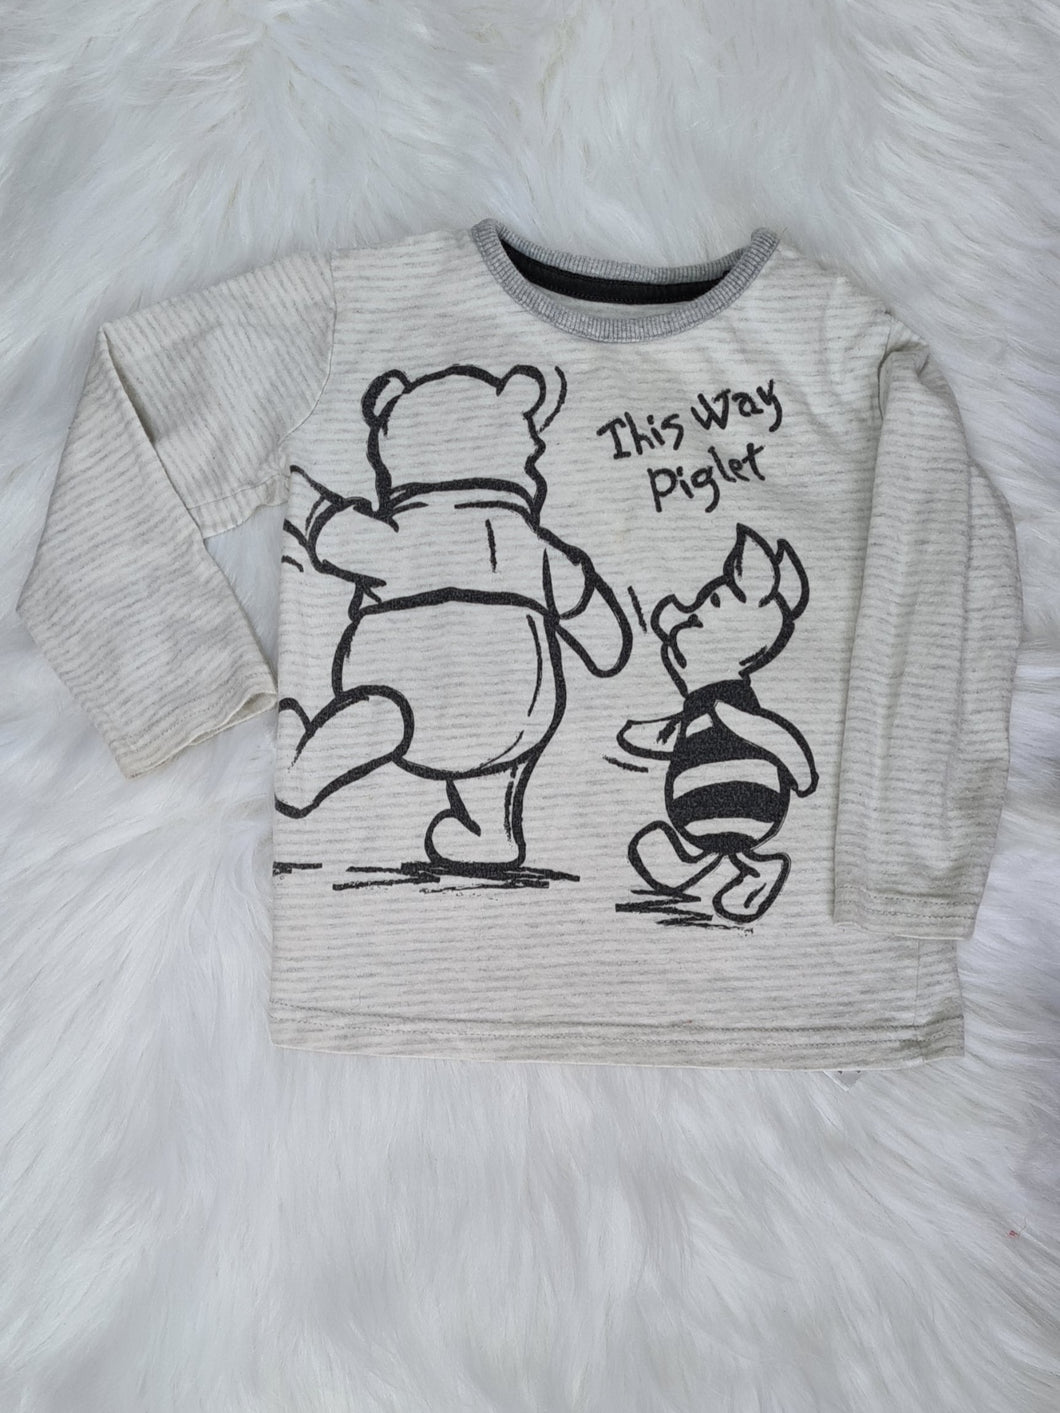 Boys 9-12 Months - Disney/Winnie the Pooh - Striped Long Sleeve Top